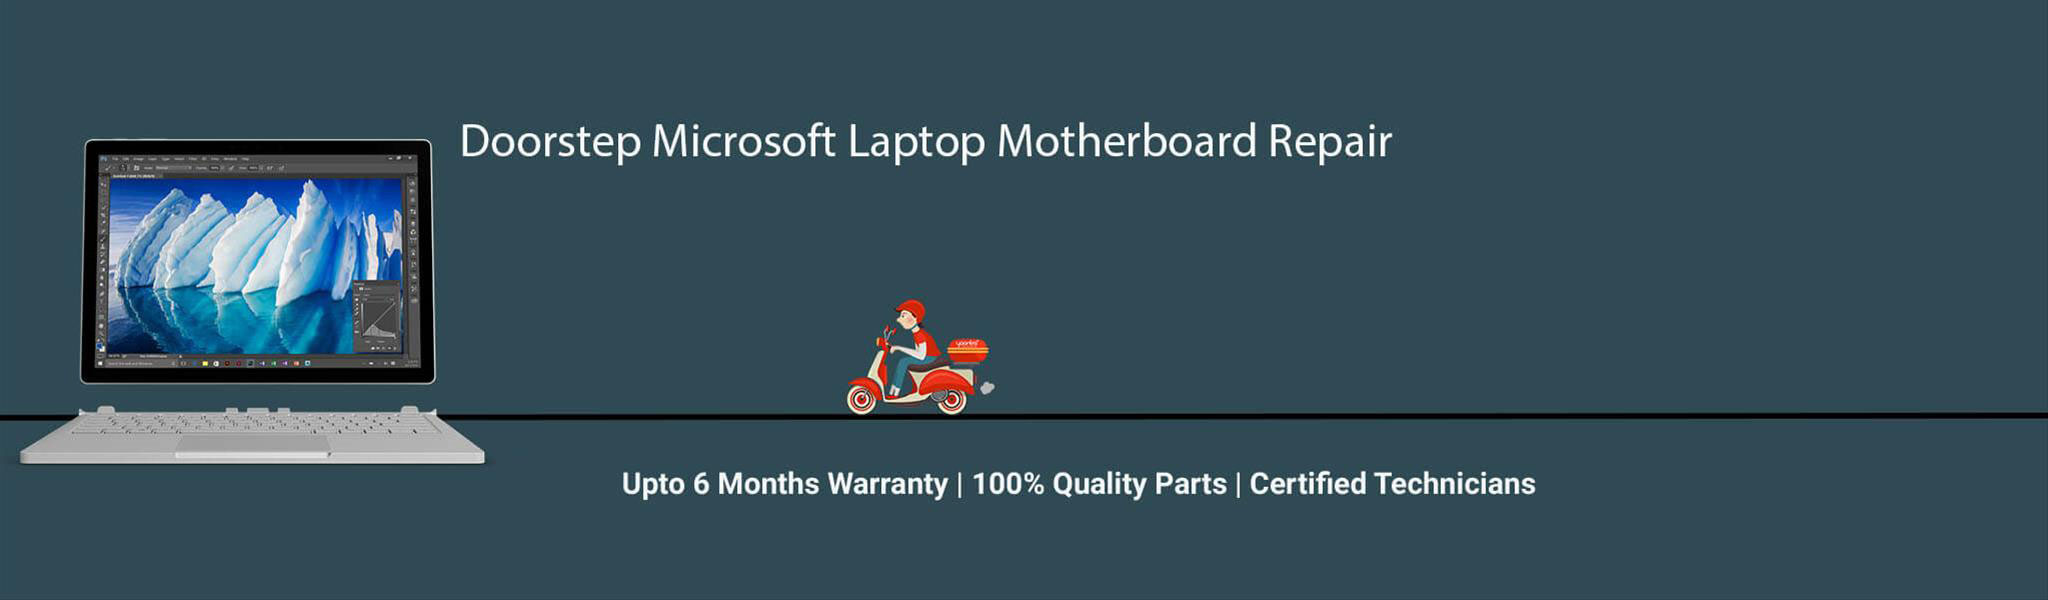 microsoft-laptop-motherboard-repair.jpg